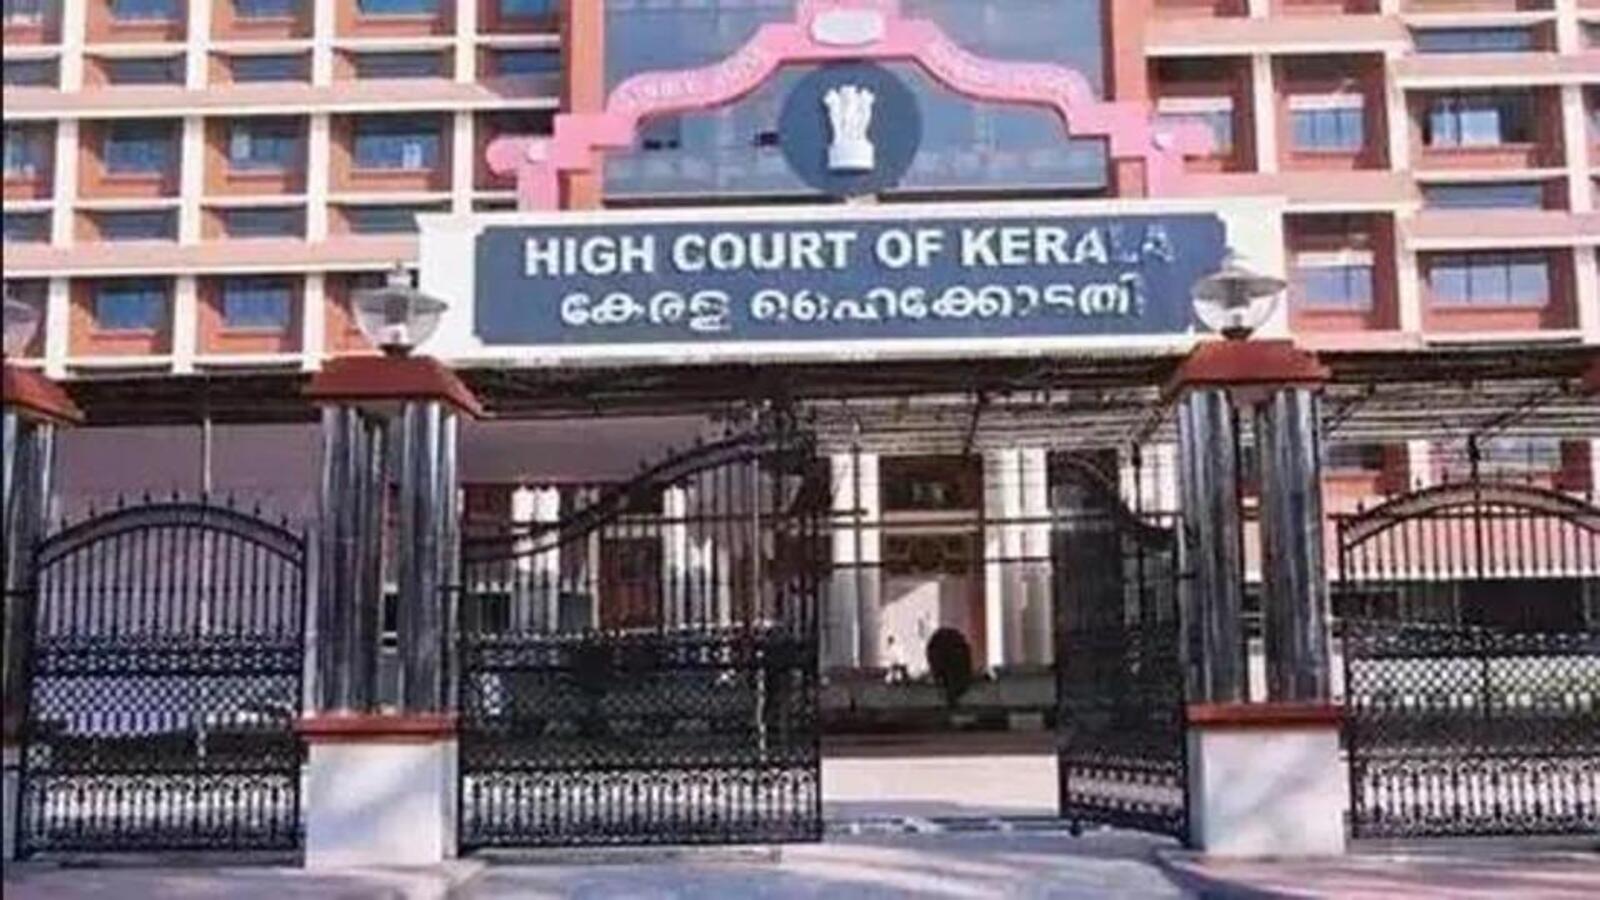 Breaking] Kerala High Court stays order transferring Sessions Judge S  Krishnakumar who authored 